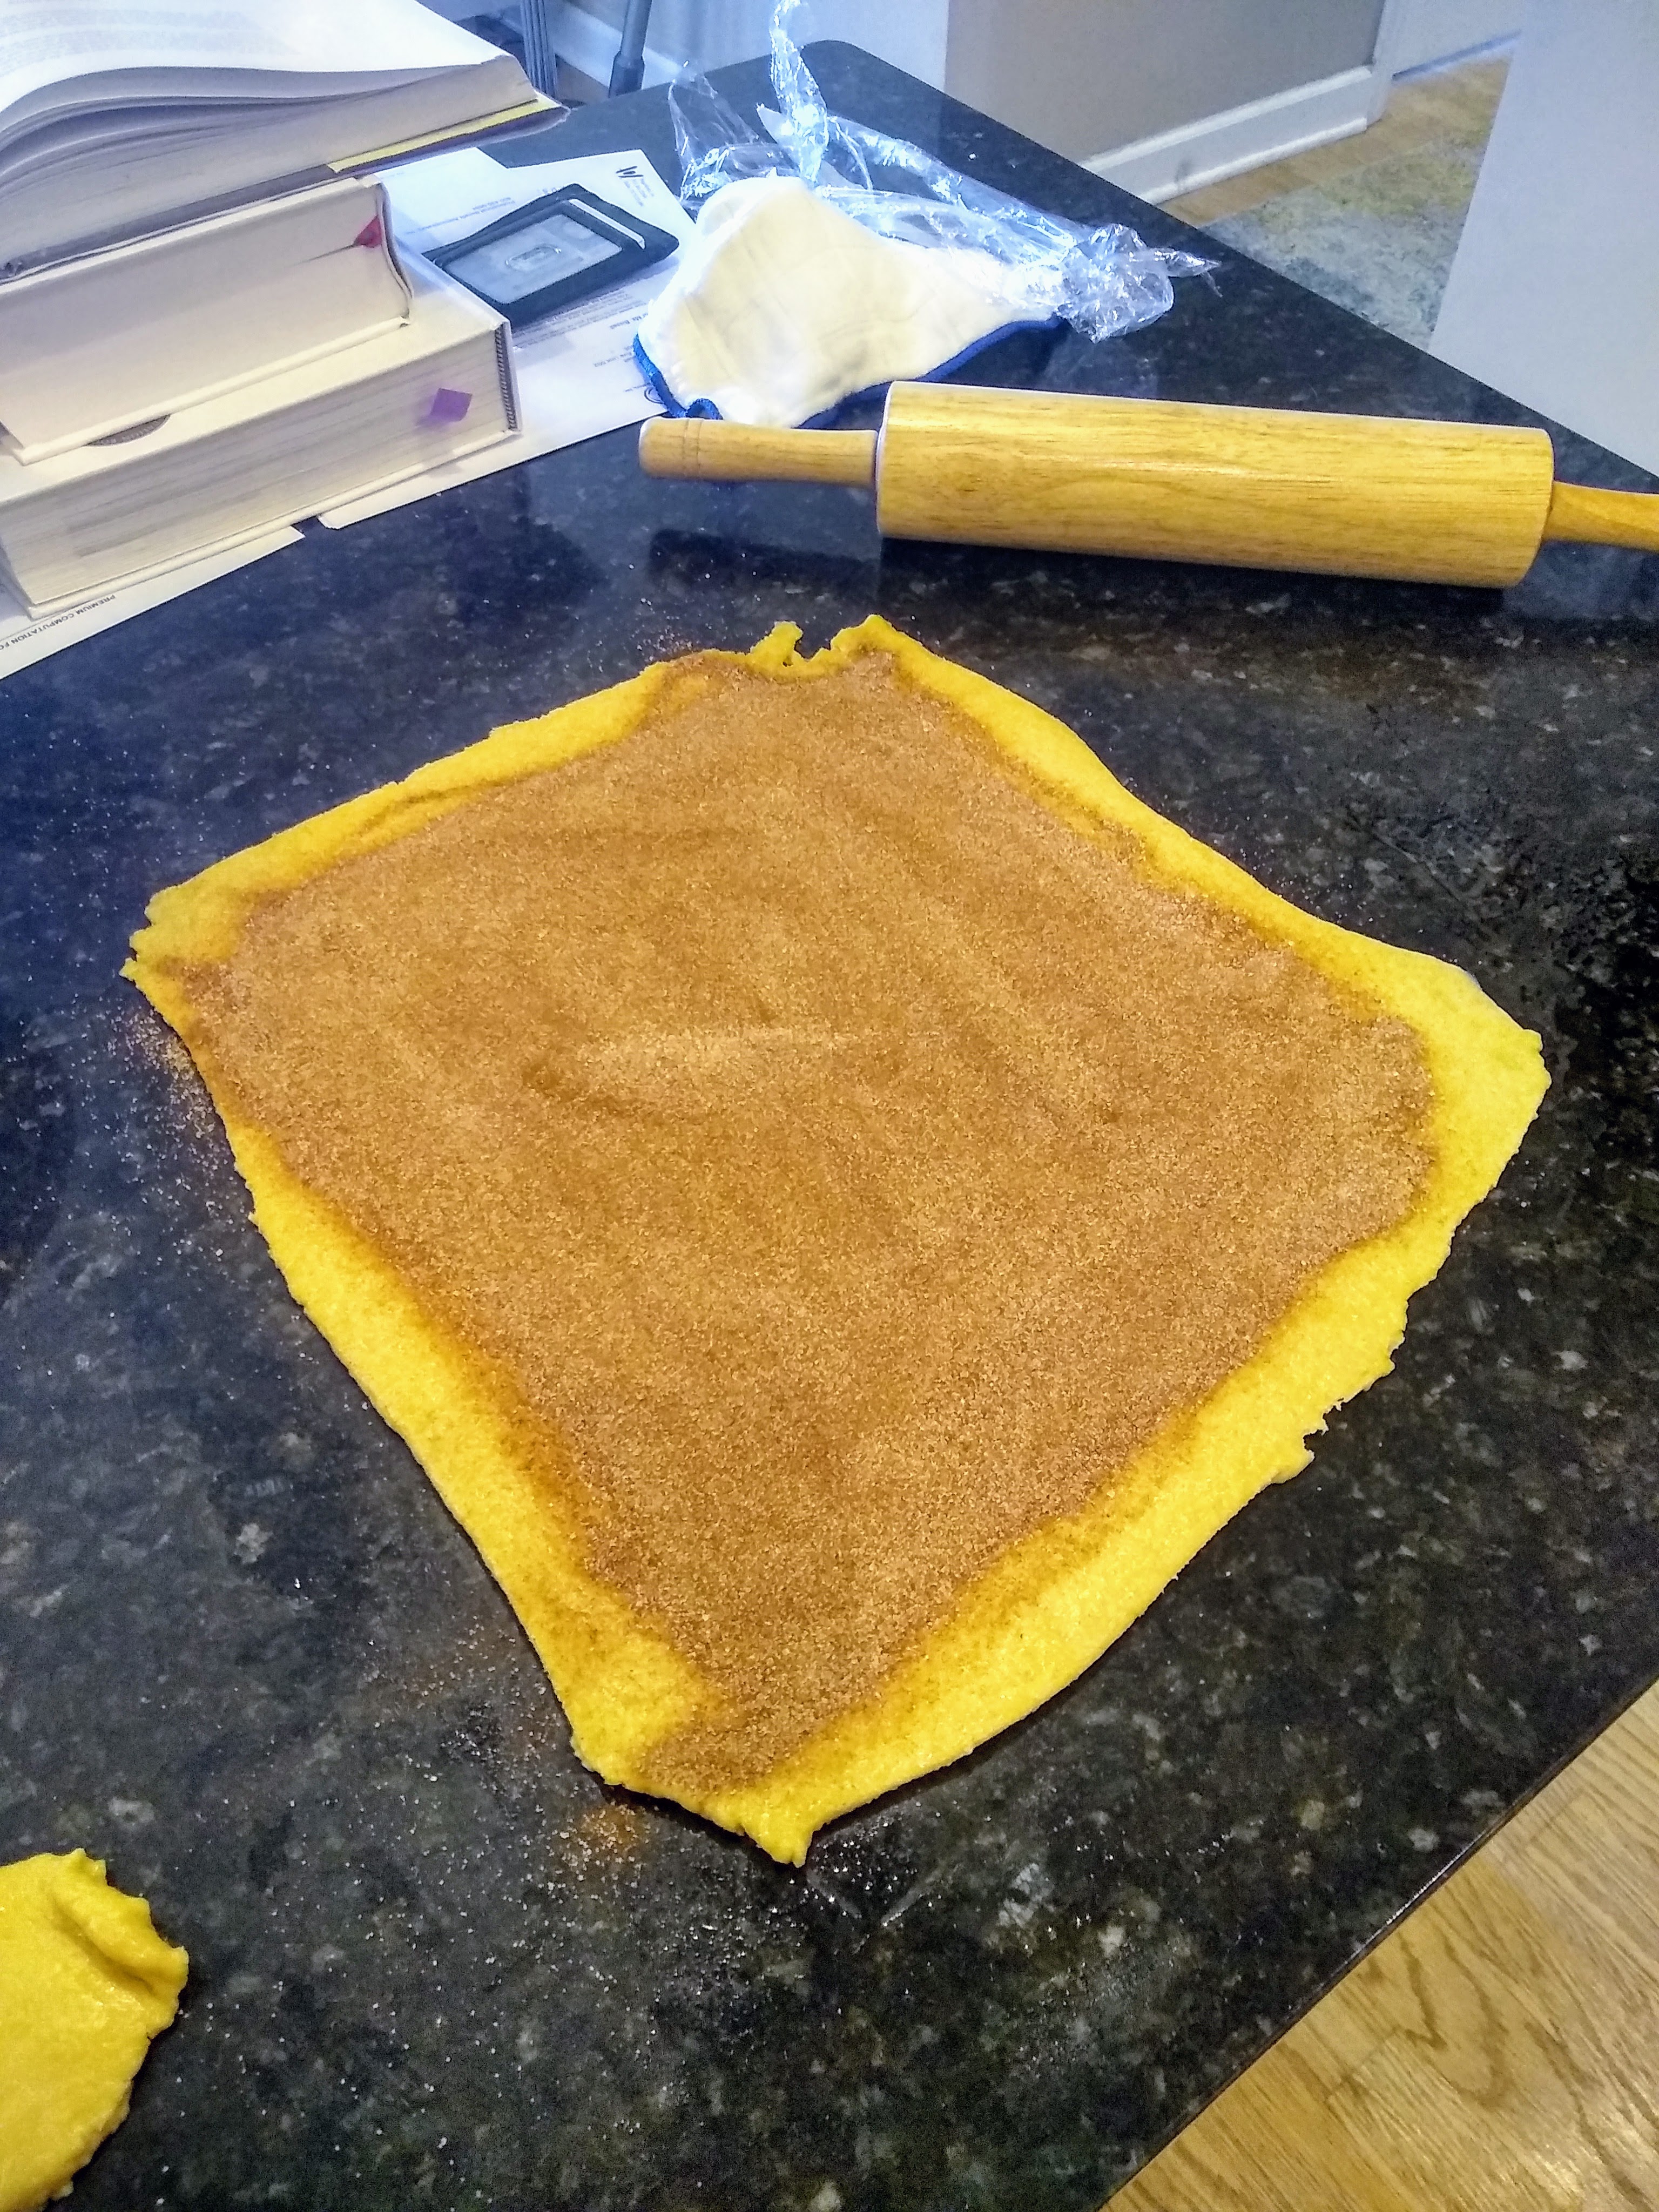 A sheet of dough, covered in cinnamon sugar.